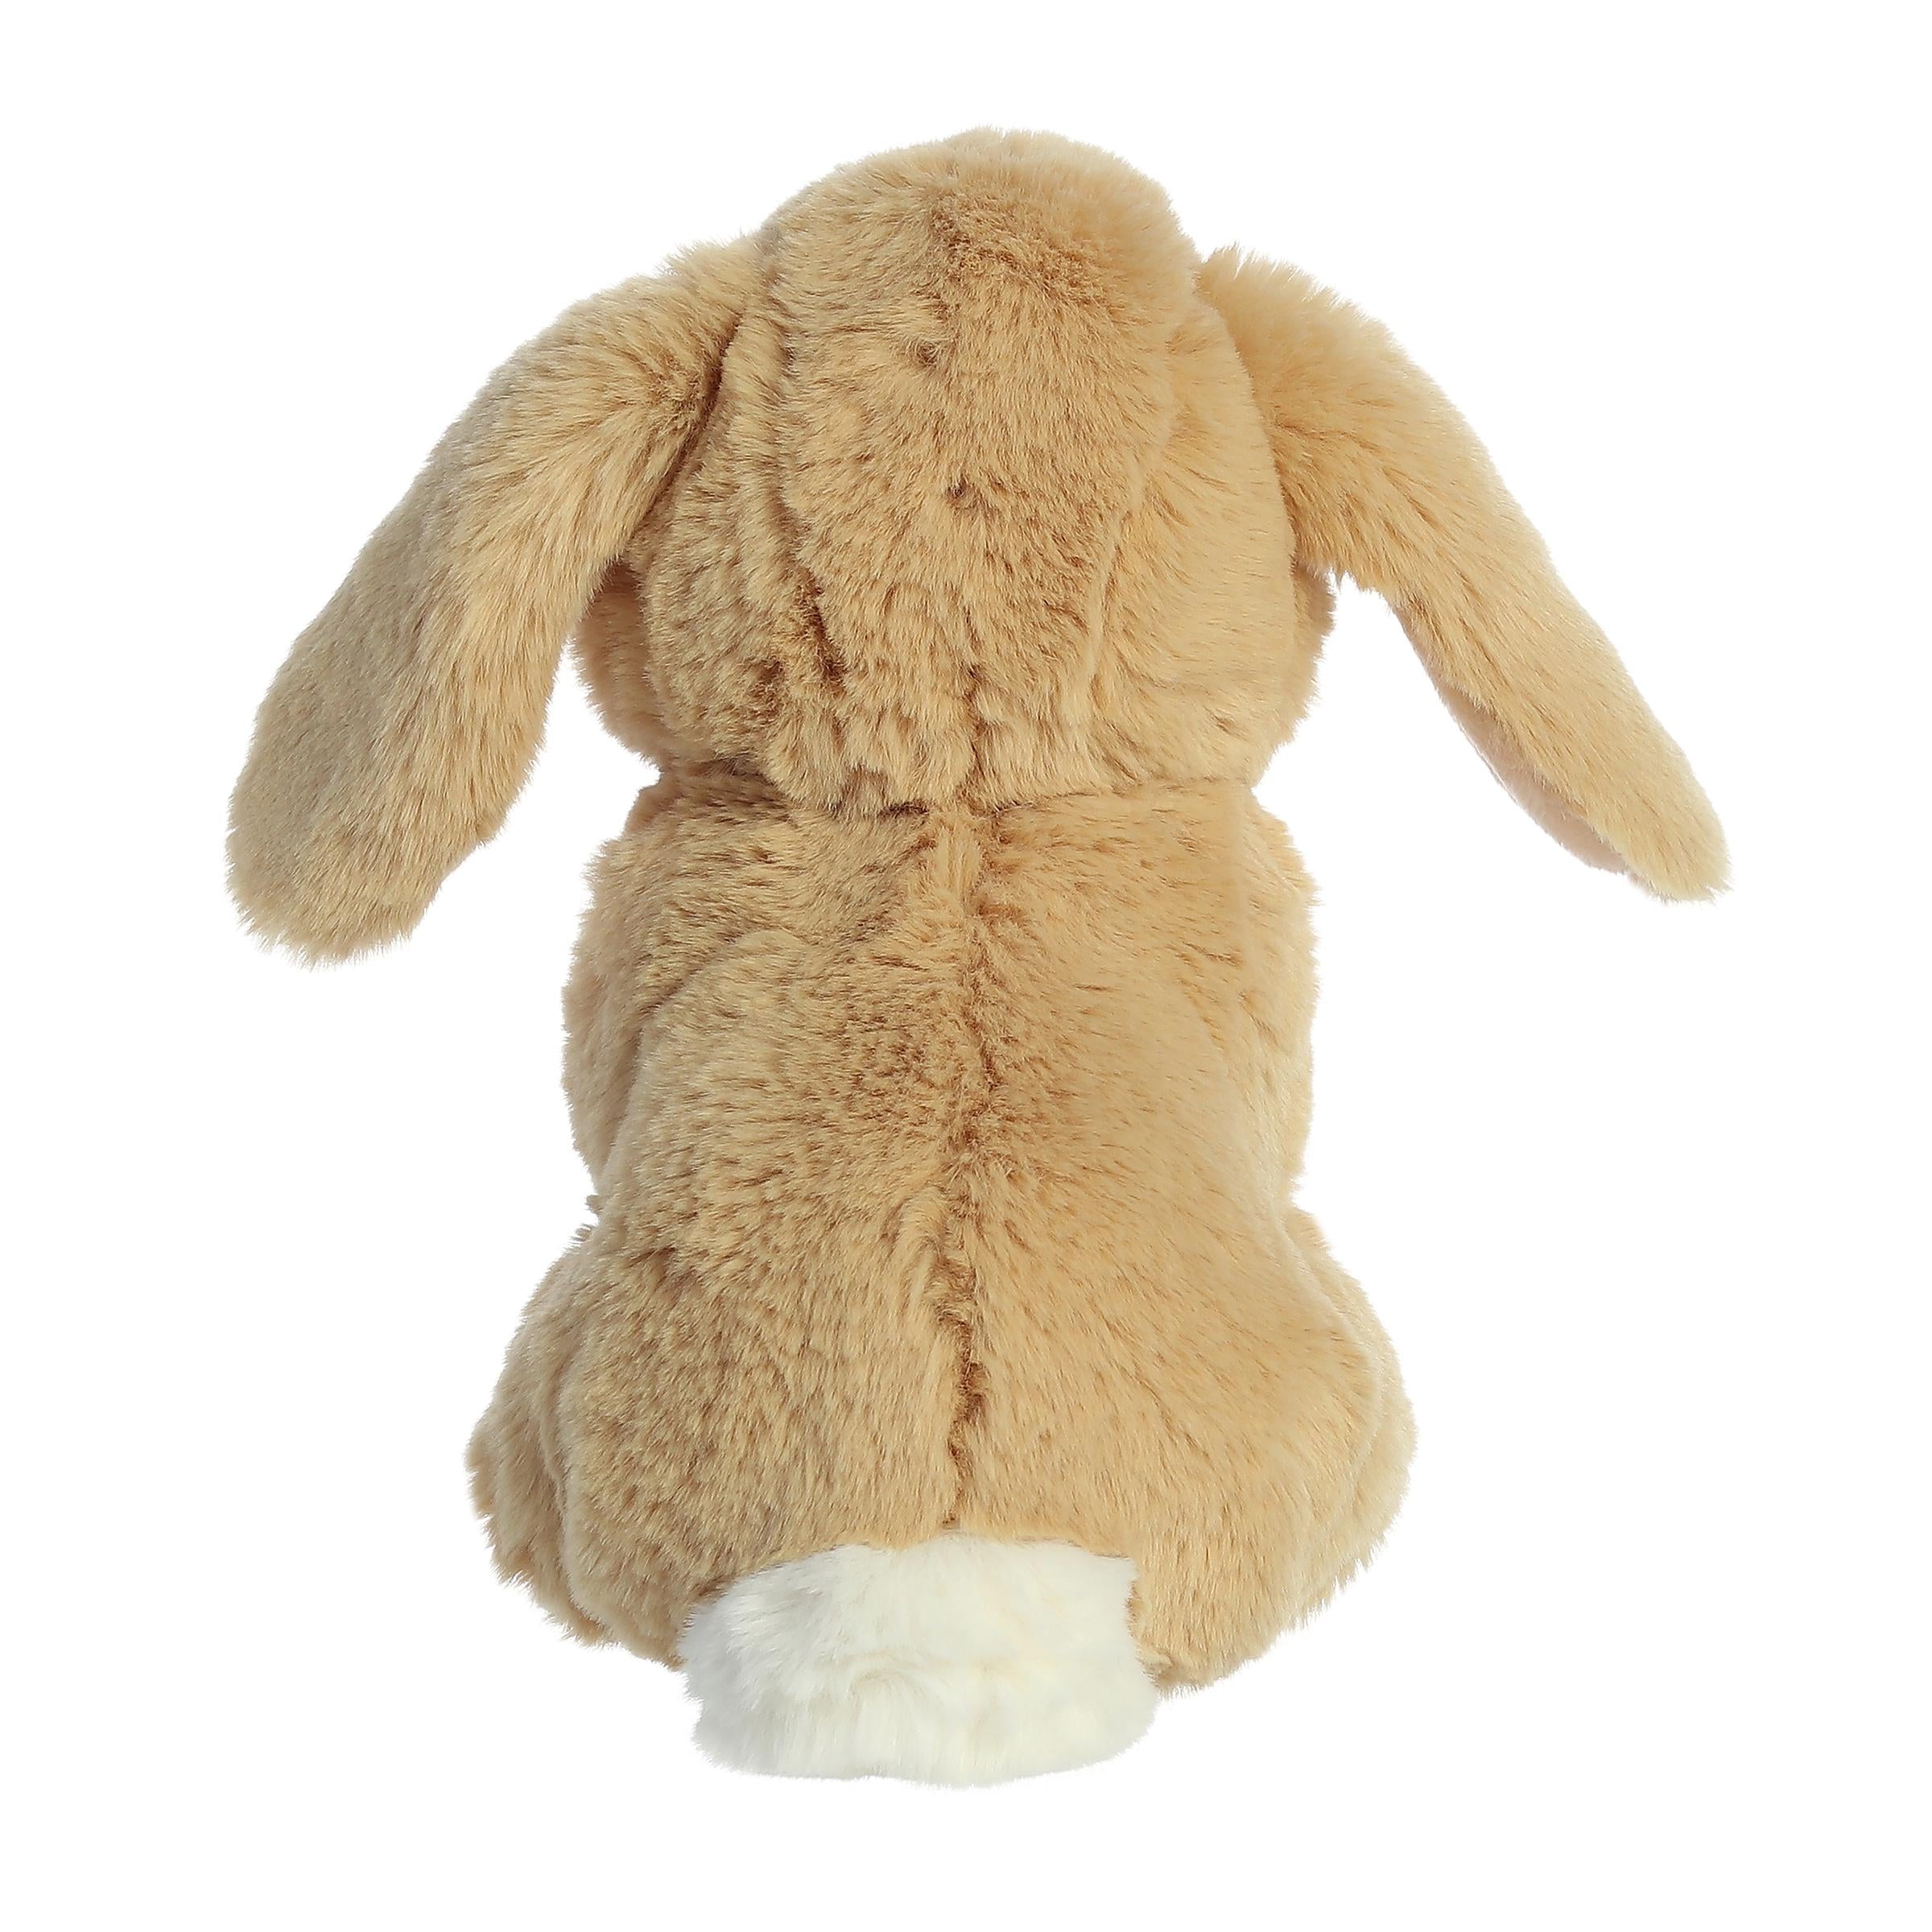 Lop-Eared Rabbit Ã¢â‚¬â€œ Whimsical Eco-Nation Stuffed Animals Ã¢â